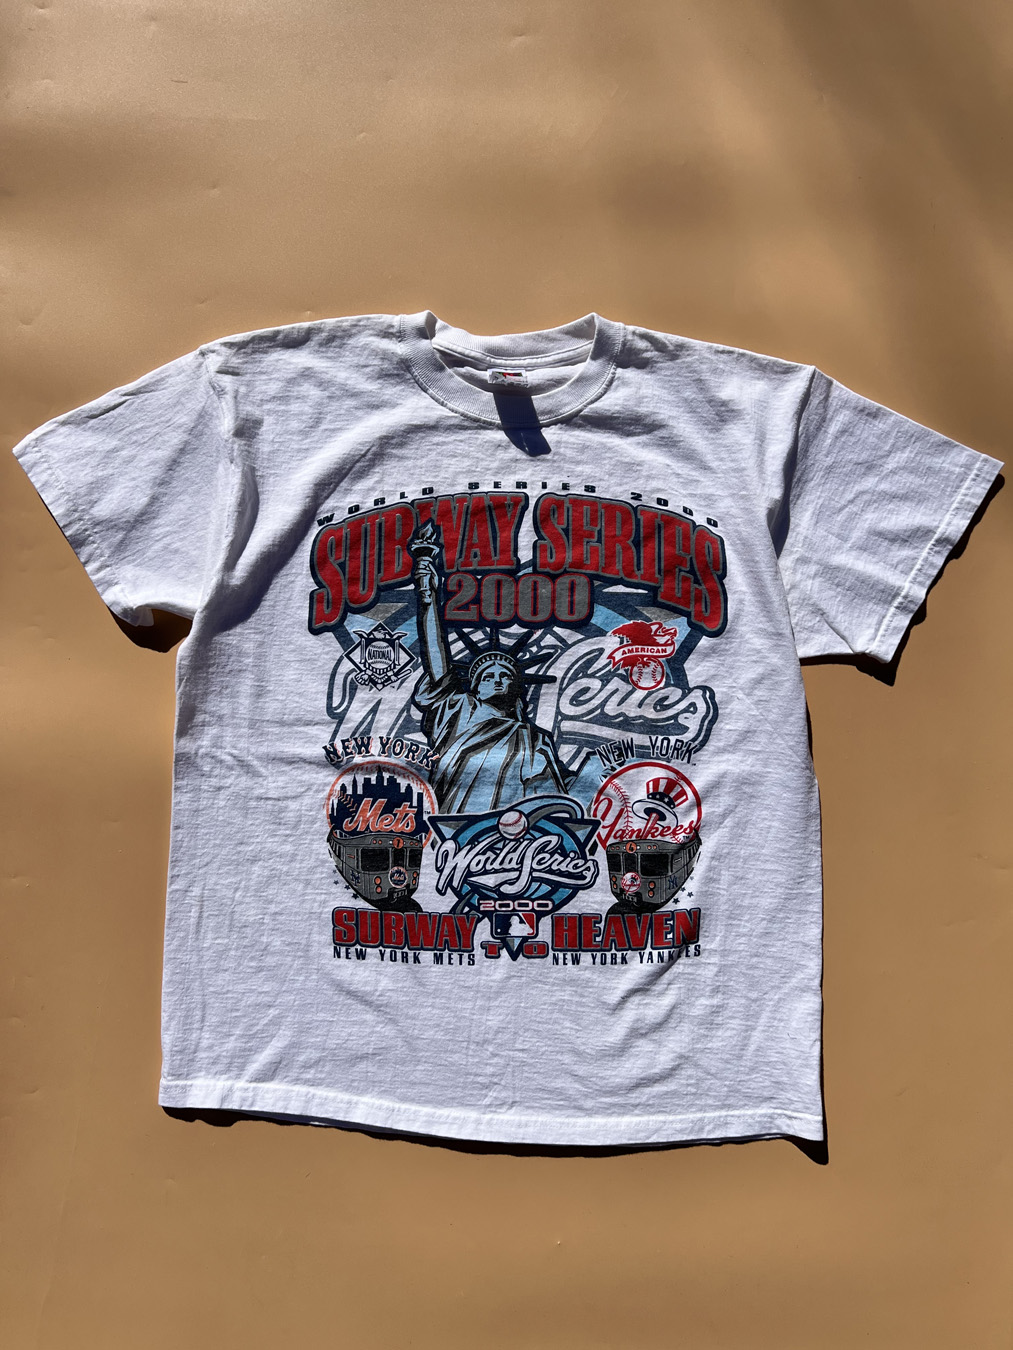 2000 Subway Series New York Yankees vs Mets Rare Vntg Tie Dye MLB T-Shirt  Size XL